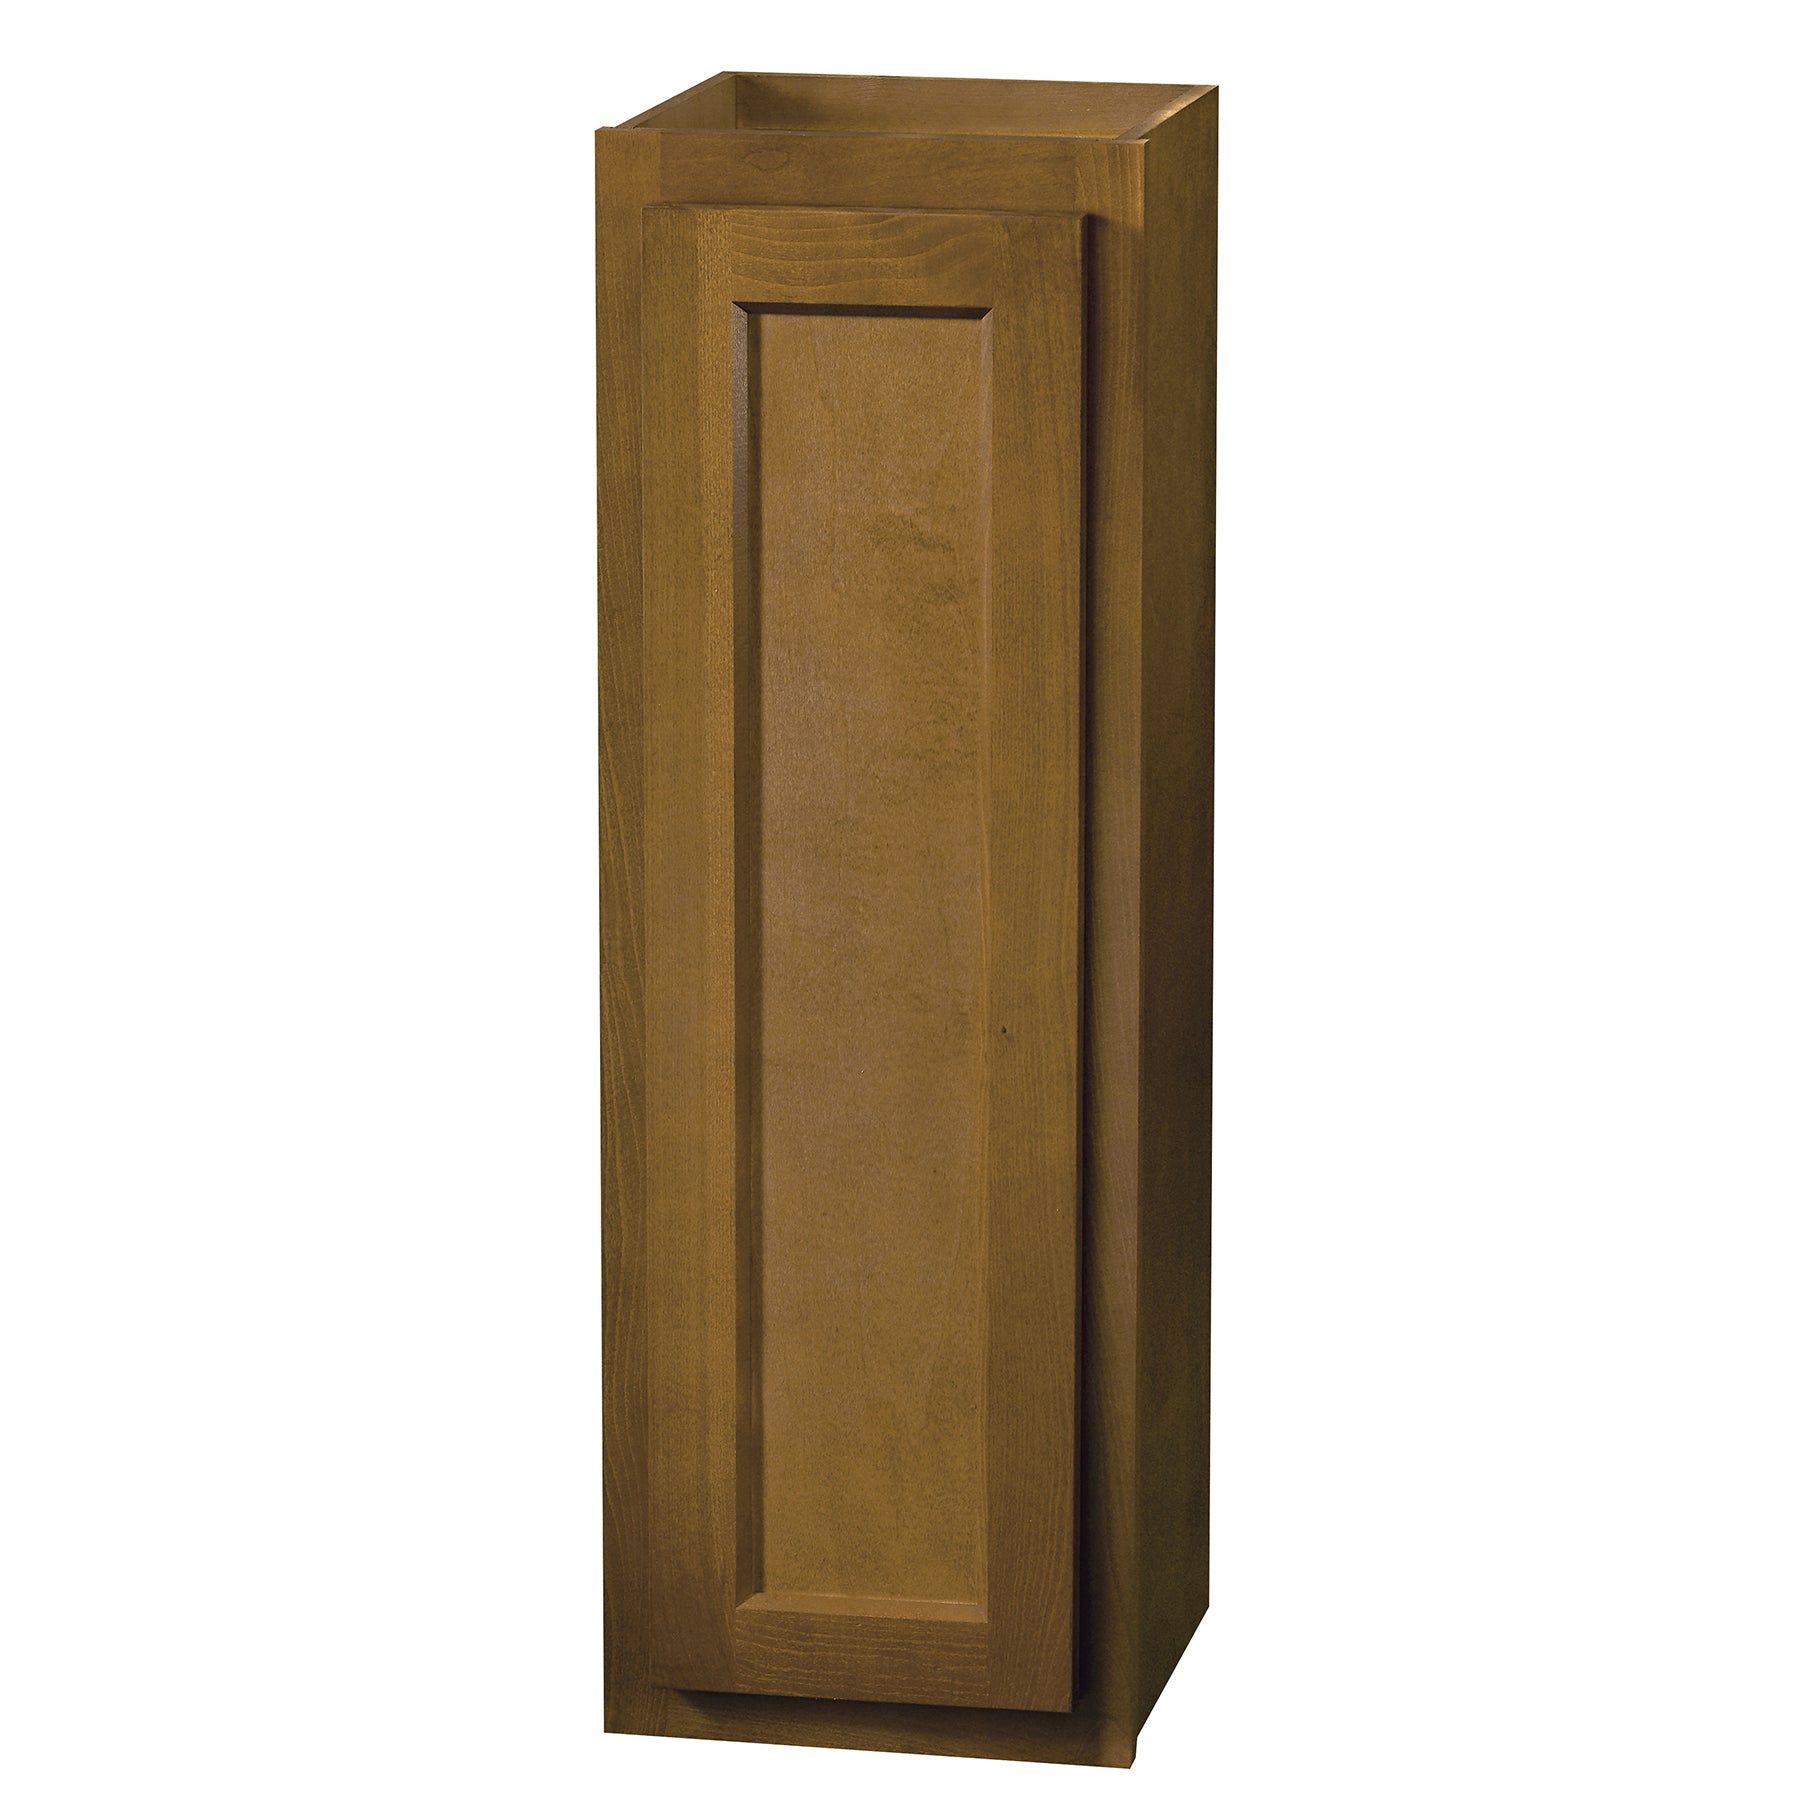 36 inch Wall Cabinets - Warmwood Shaker - 12 Inch W x 36 Inch H x 12 Inch D